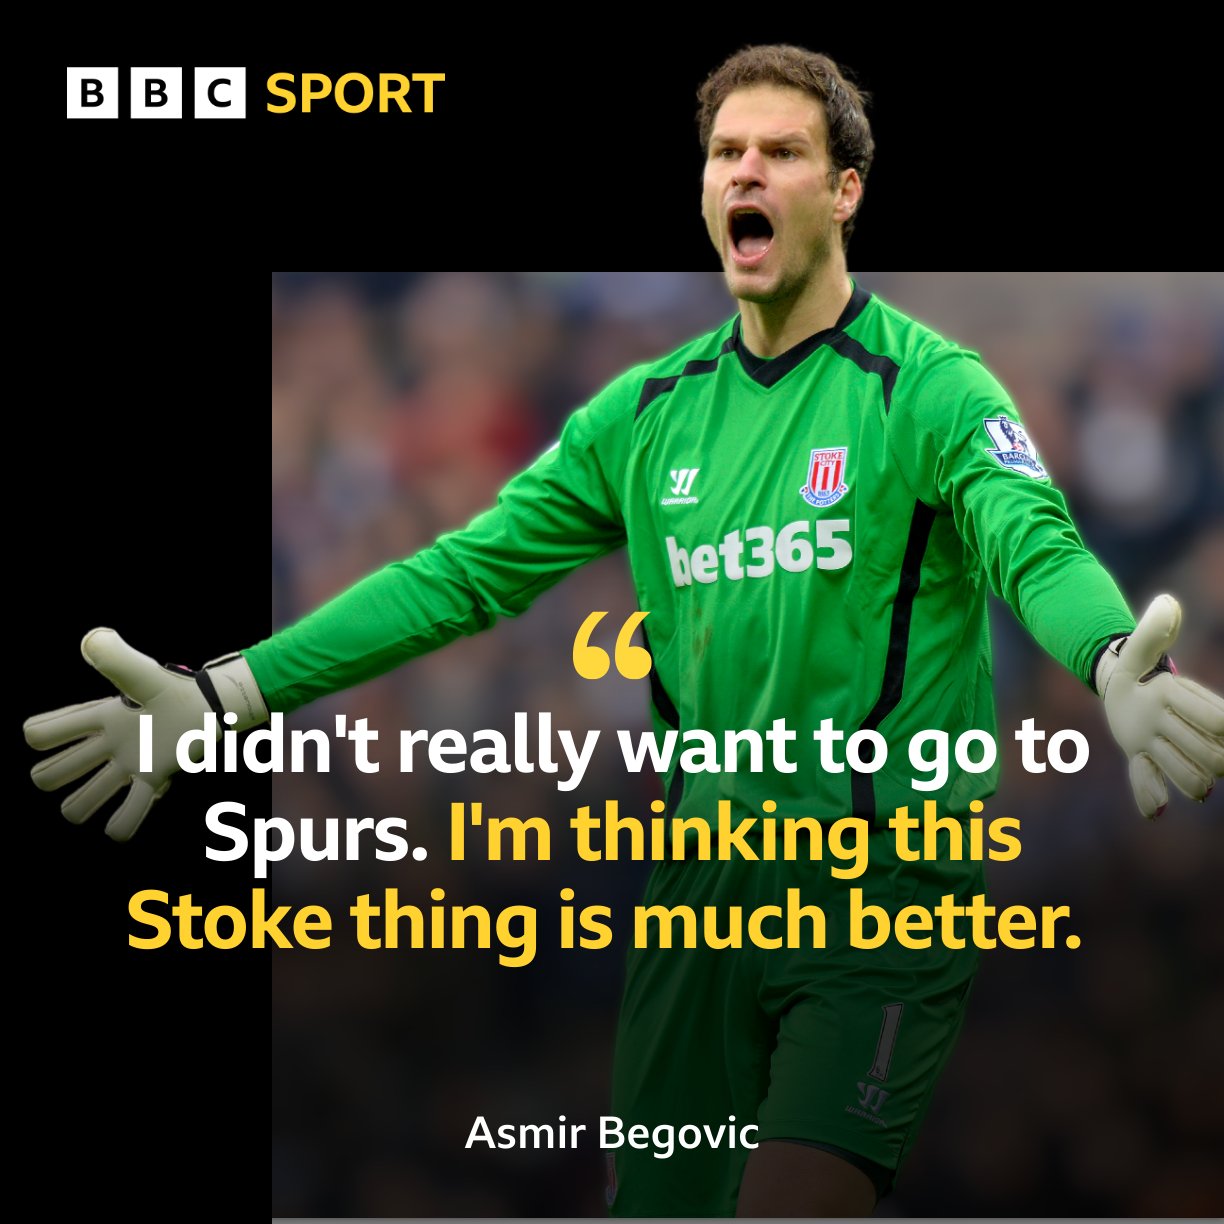 BBC Radio Stoke Sport (@BBCStokeSport) / Twitter